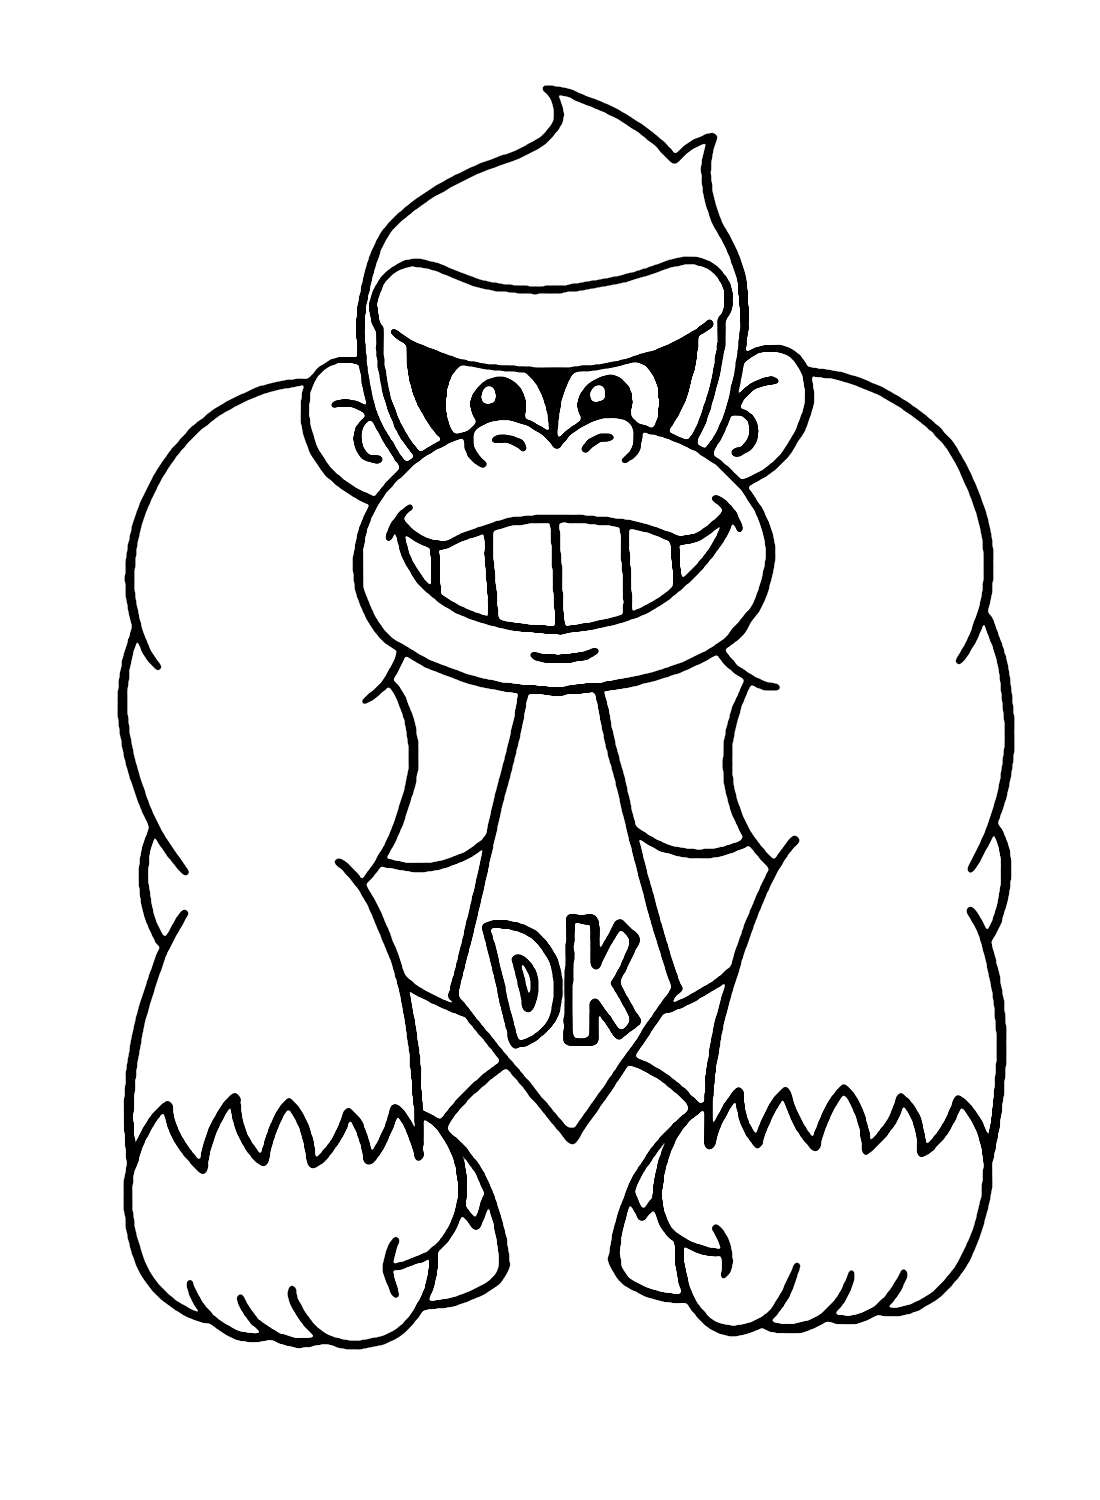 Donkey Kong fofo de Donkey Kong